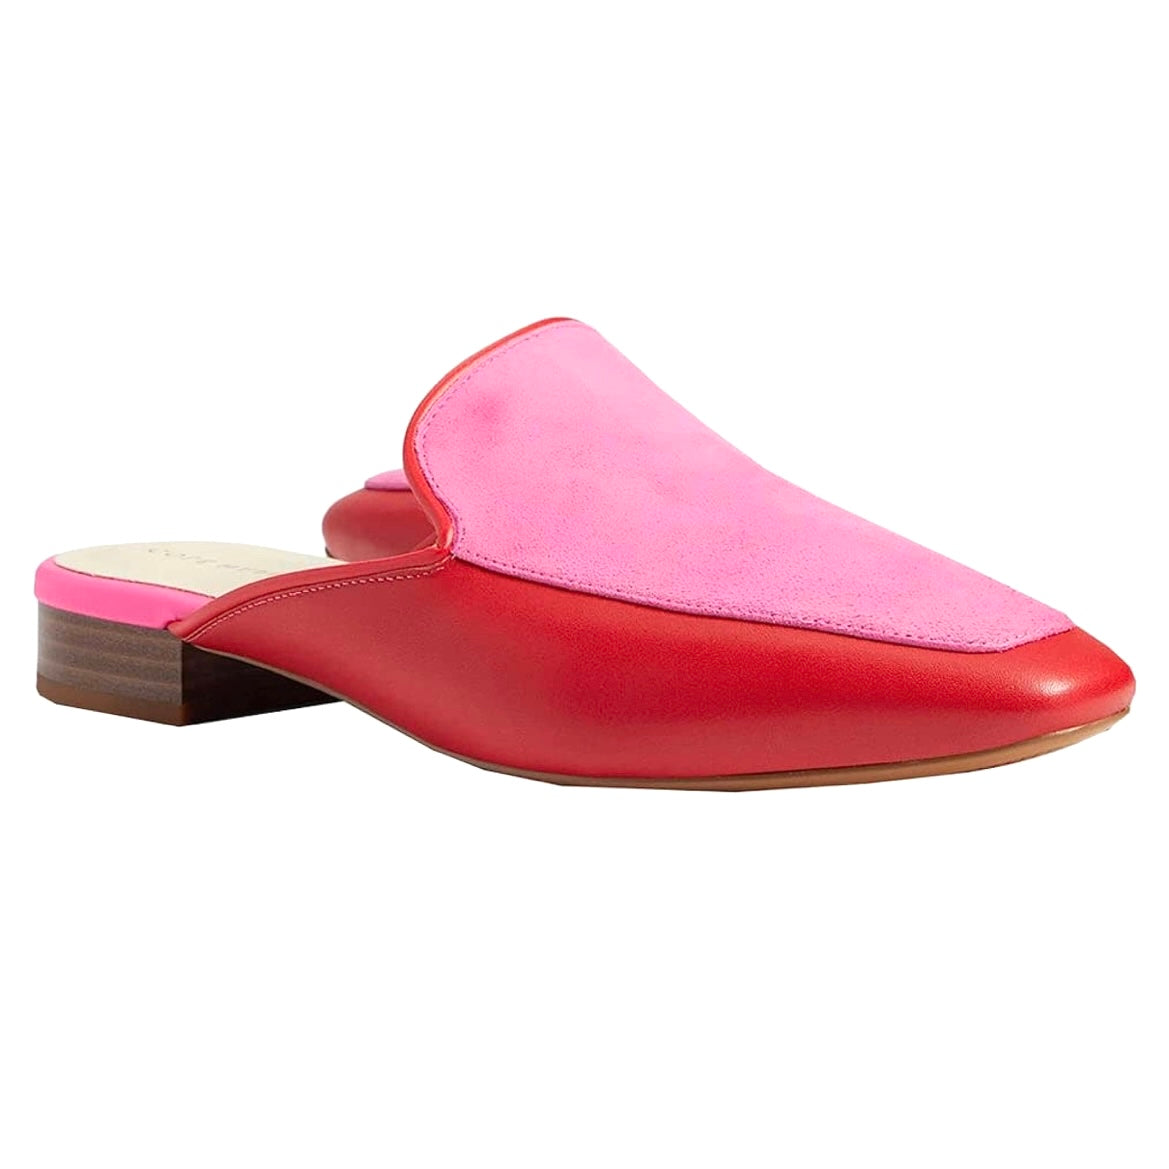 PERLEY MULE Classic Red/Fuchsia Square Toe Slip On Women's Flats